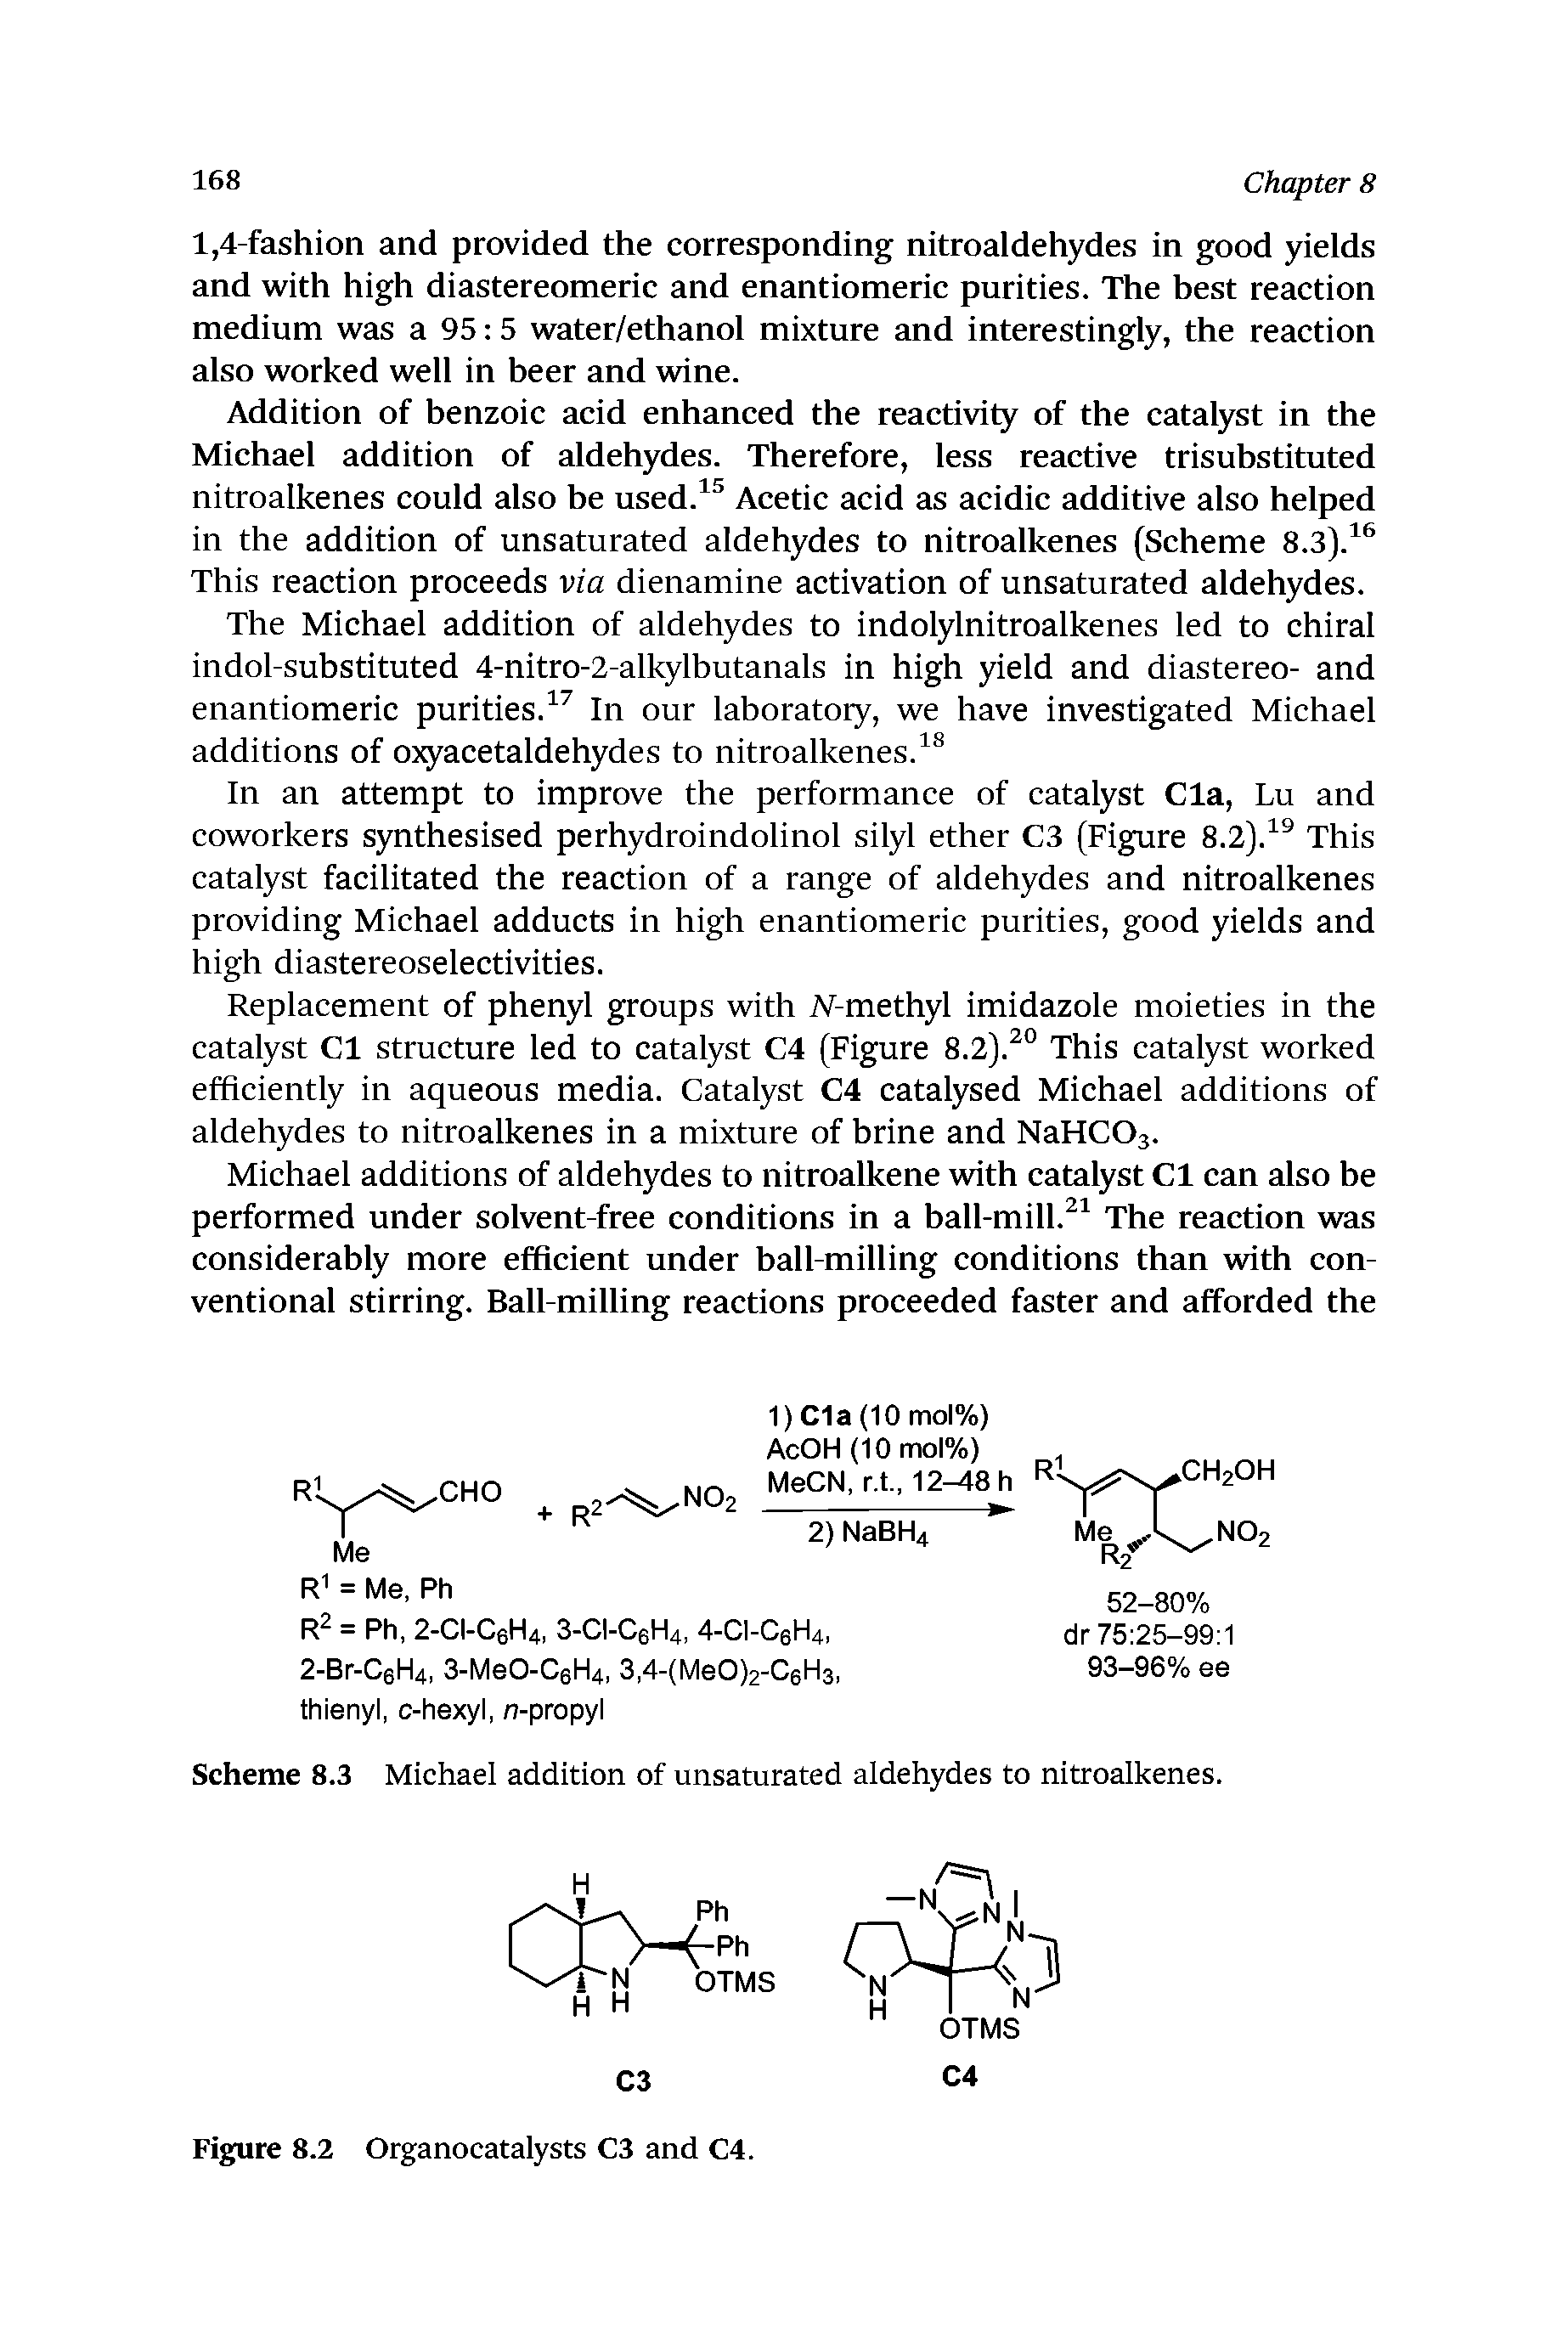 Scheme 8.3 Michael addition of unsaturated aldehydes to nitroalkenes.